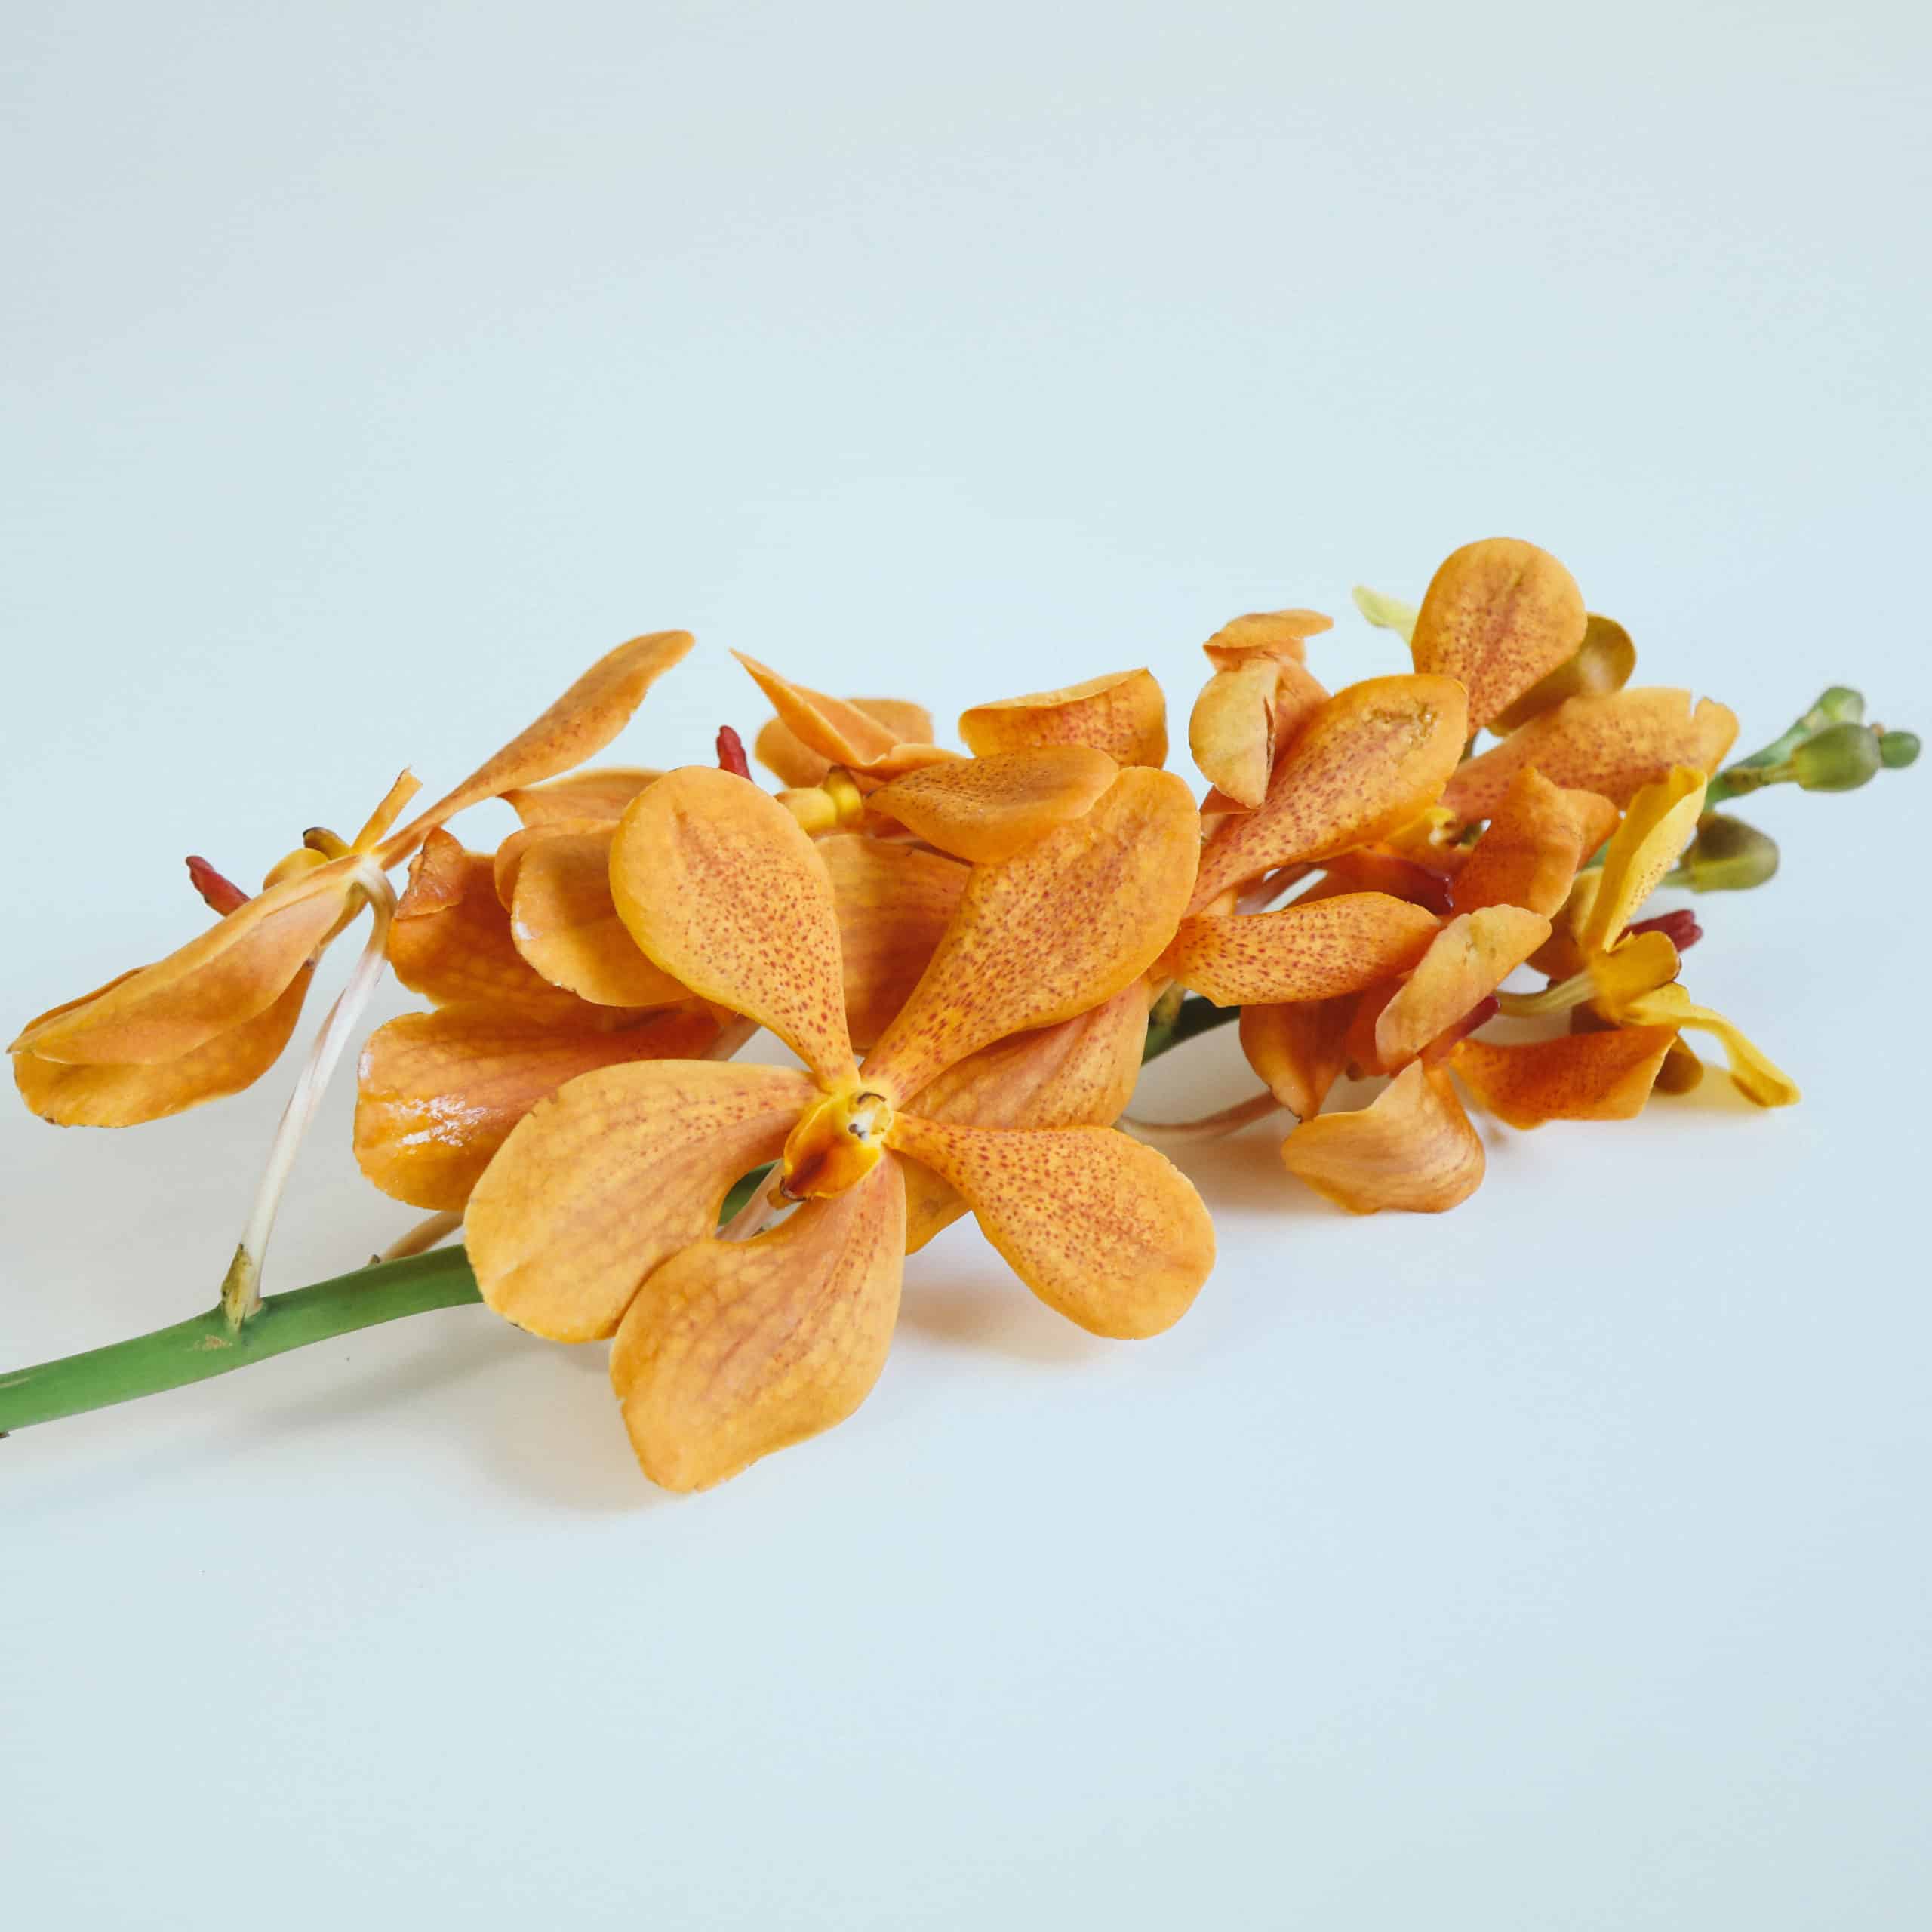 CARNATION ORANGE - Wholesale Bulk Flowers - Cascade Floral